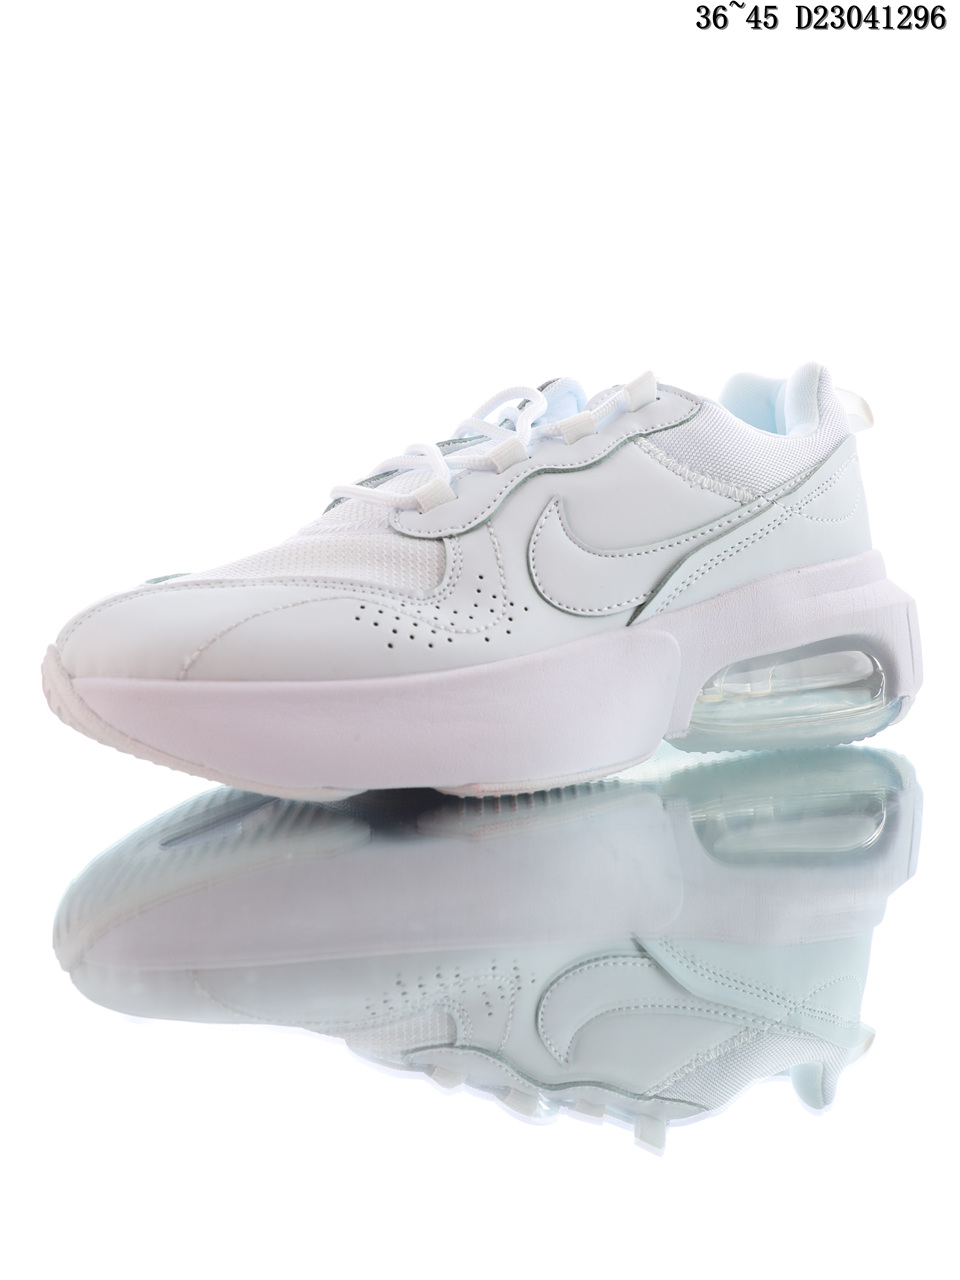 Nike Air Max Verona white cushioned running shoes side